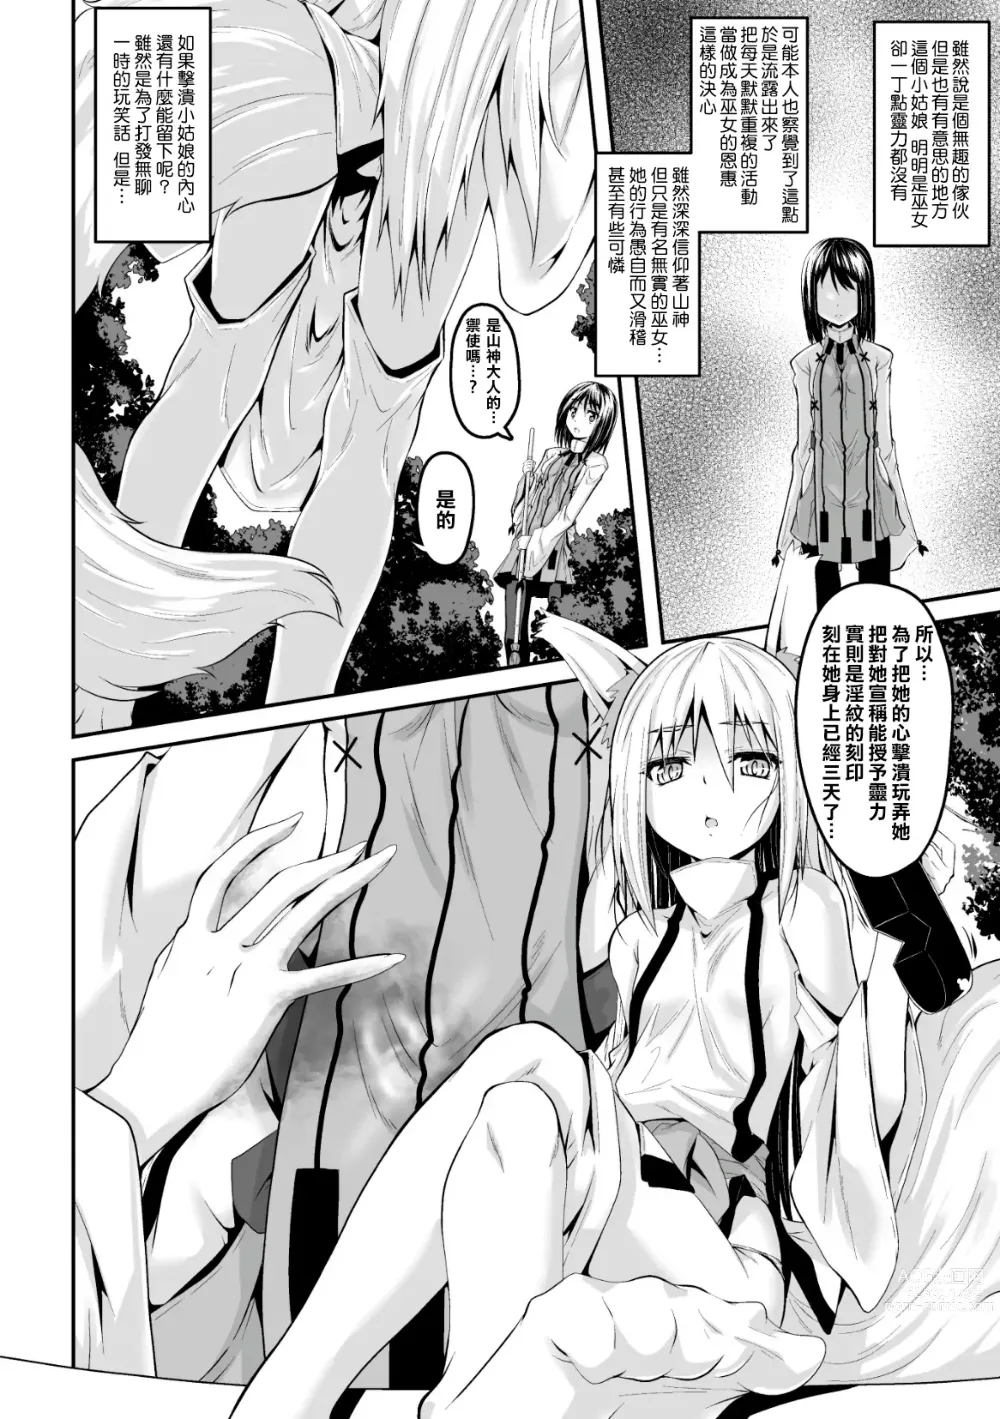 Page 5 of manga Youko Inmon Kitan 2